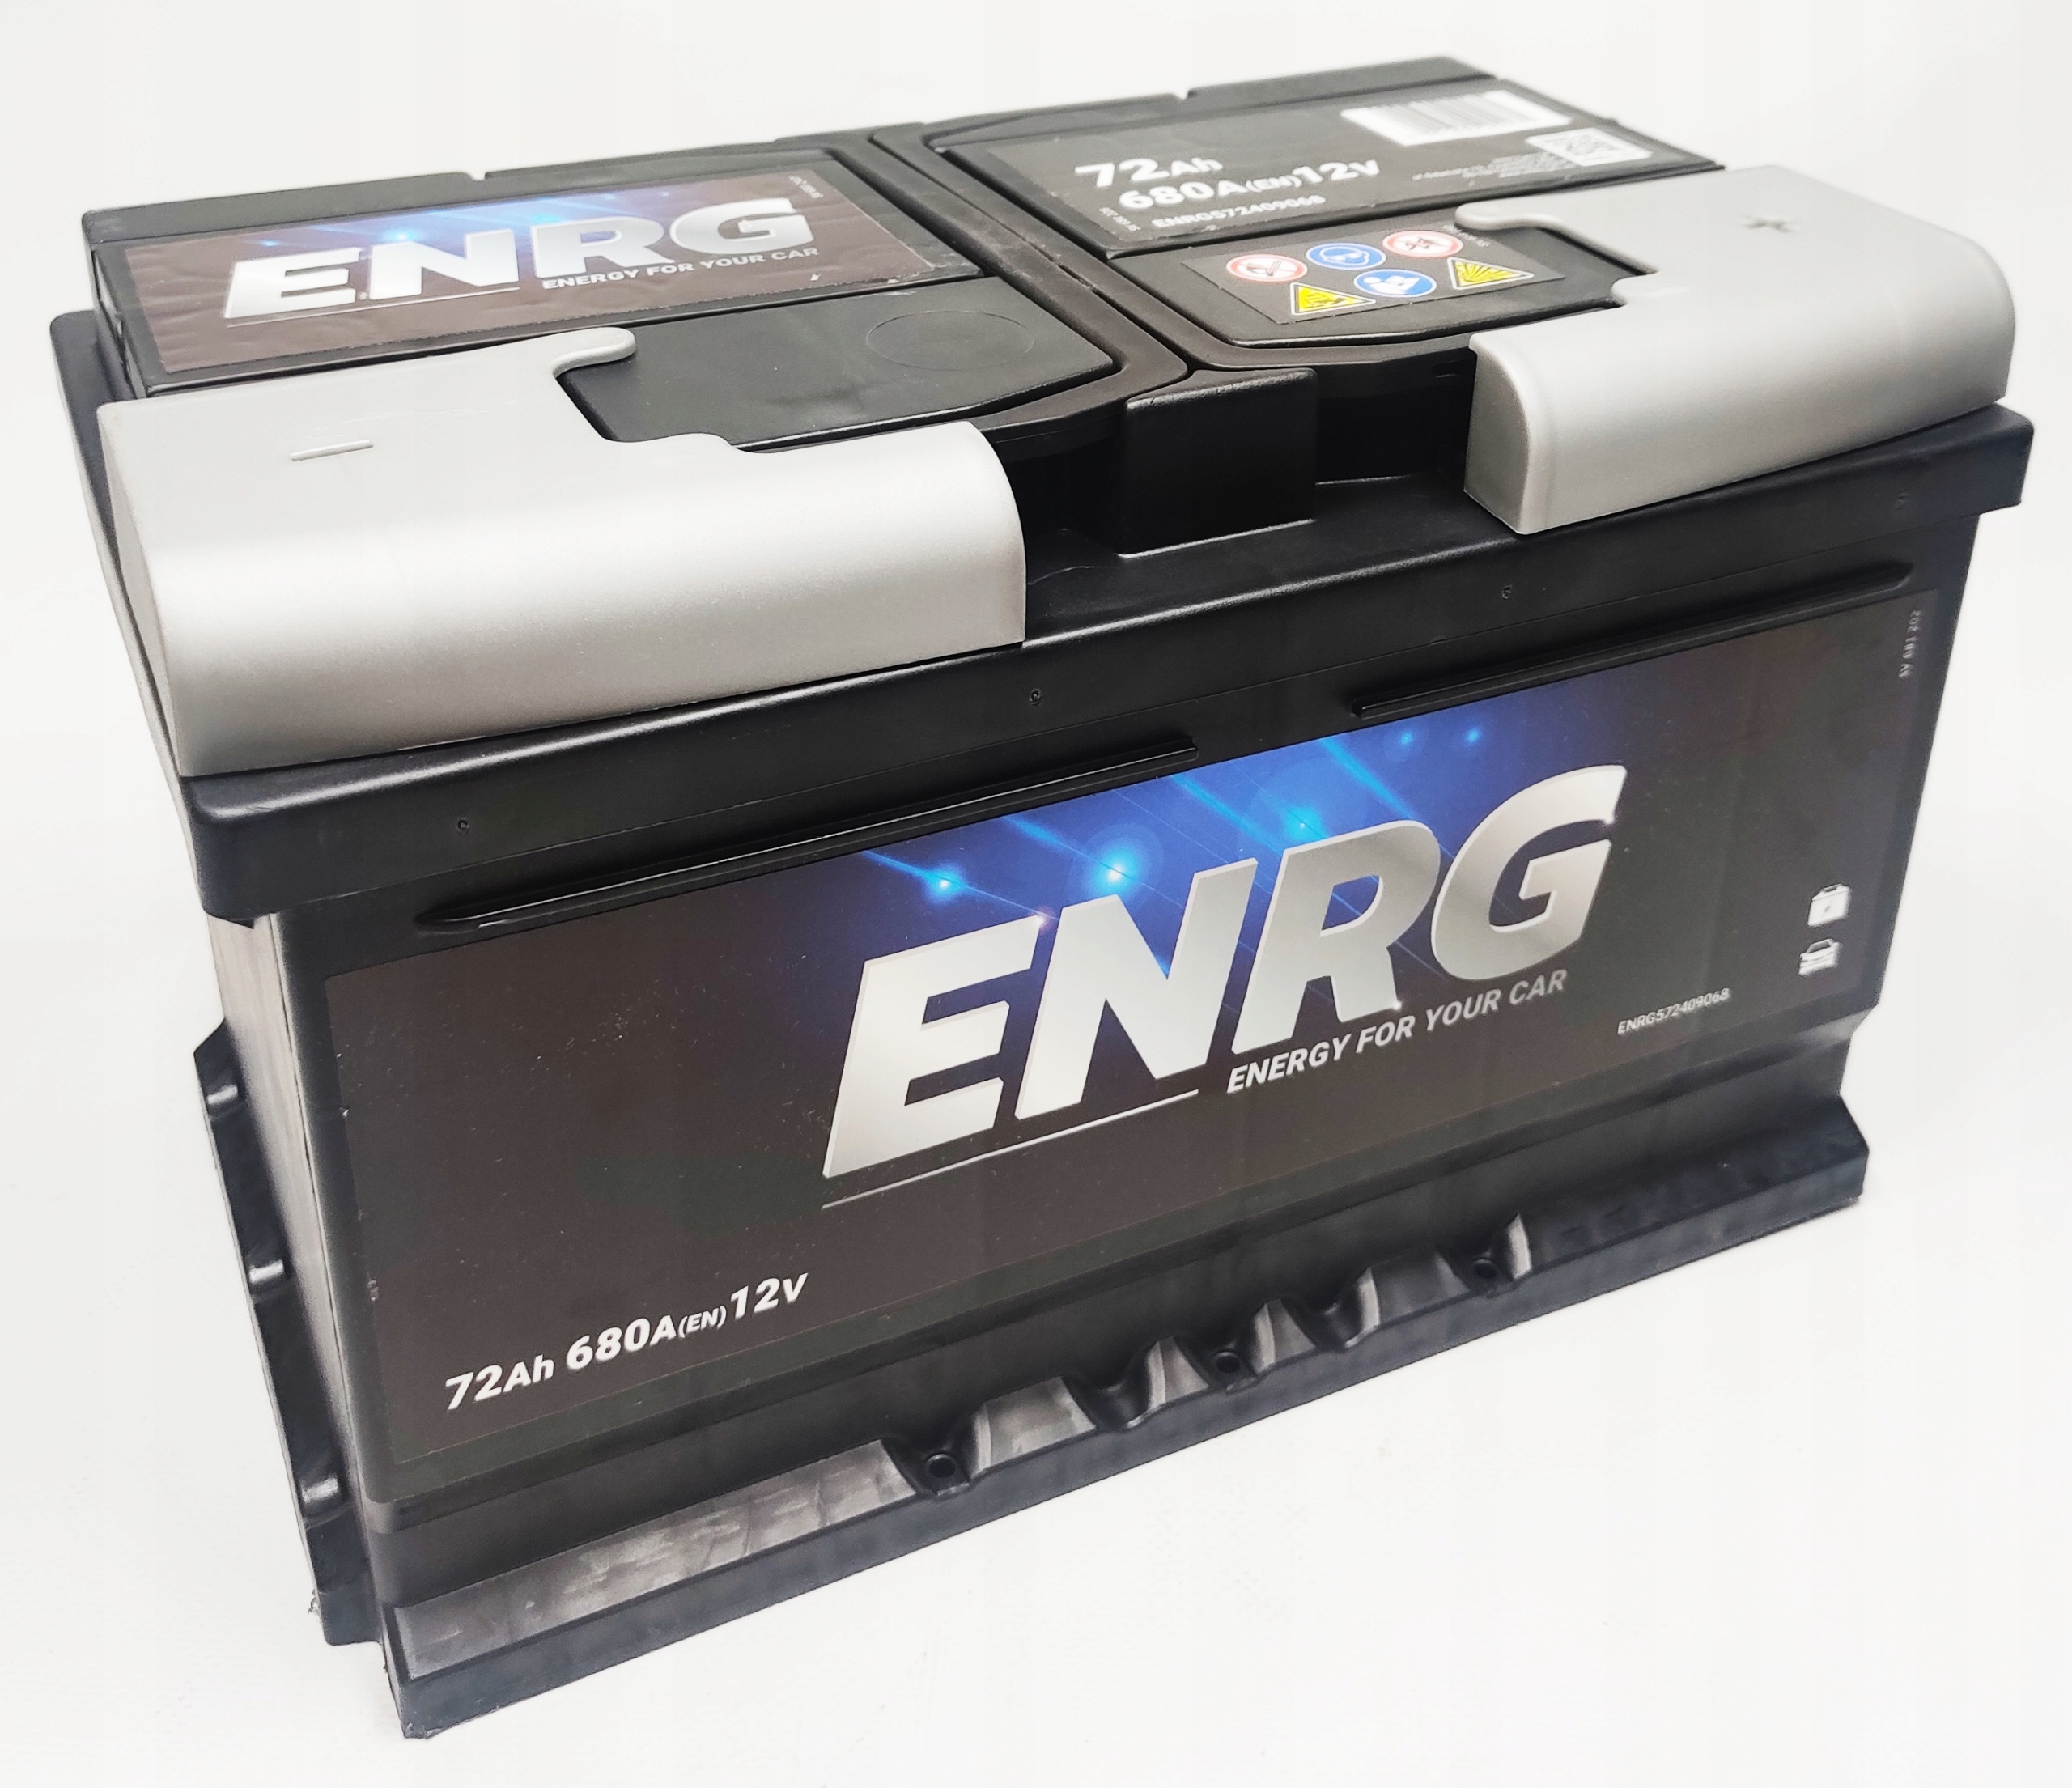 Akumulator rozruchowy ENRG 12V 72Ah 680A P+ ENRG572409068 za 379